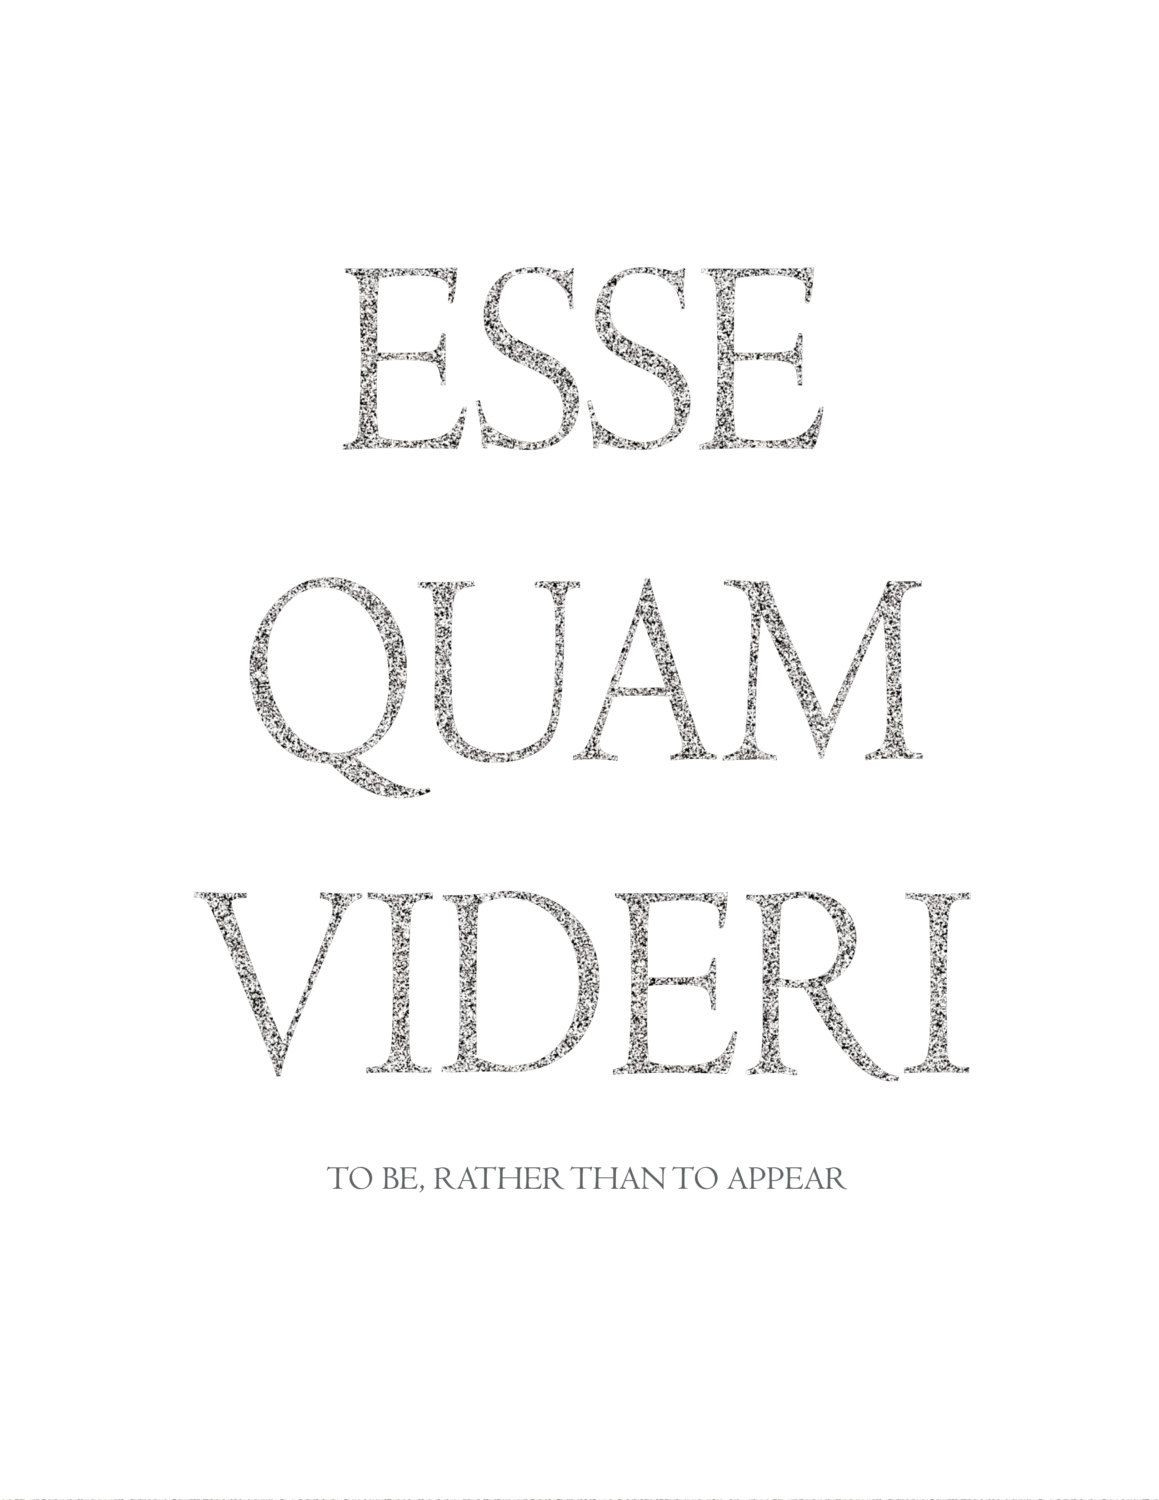 Latin Quotes About Family
 Printable Art Esse Quam Videri Latin by